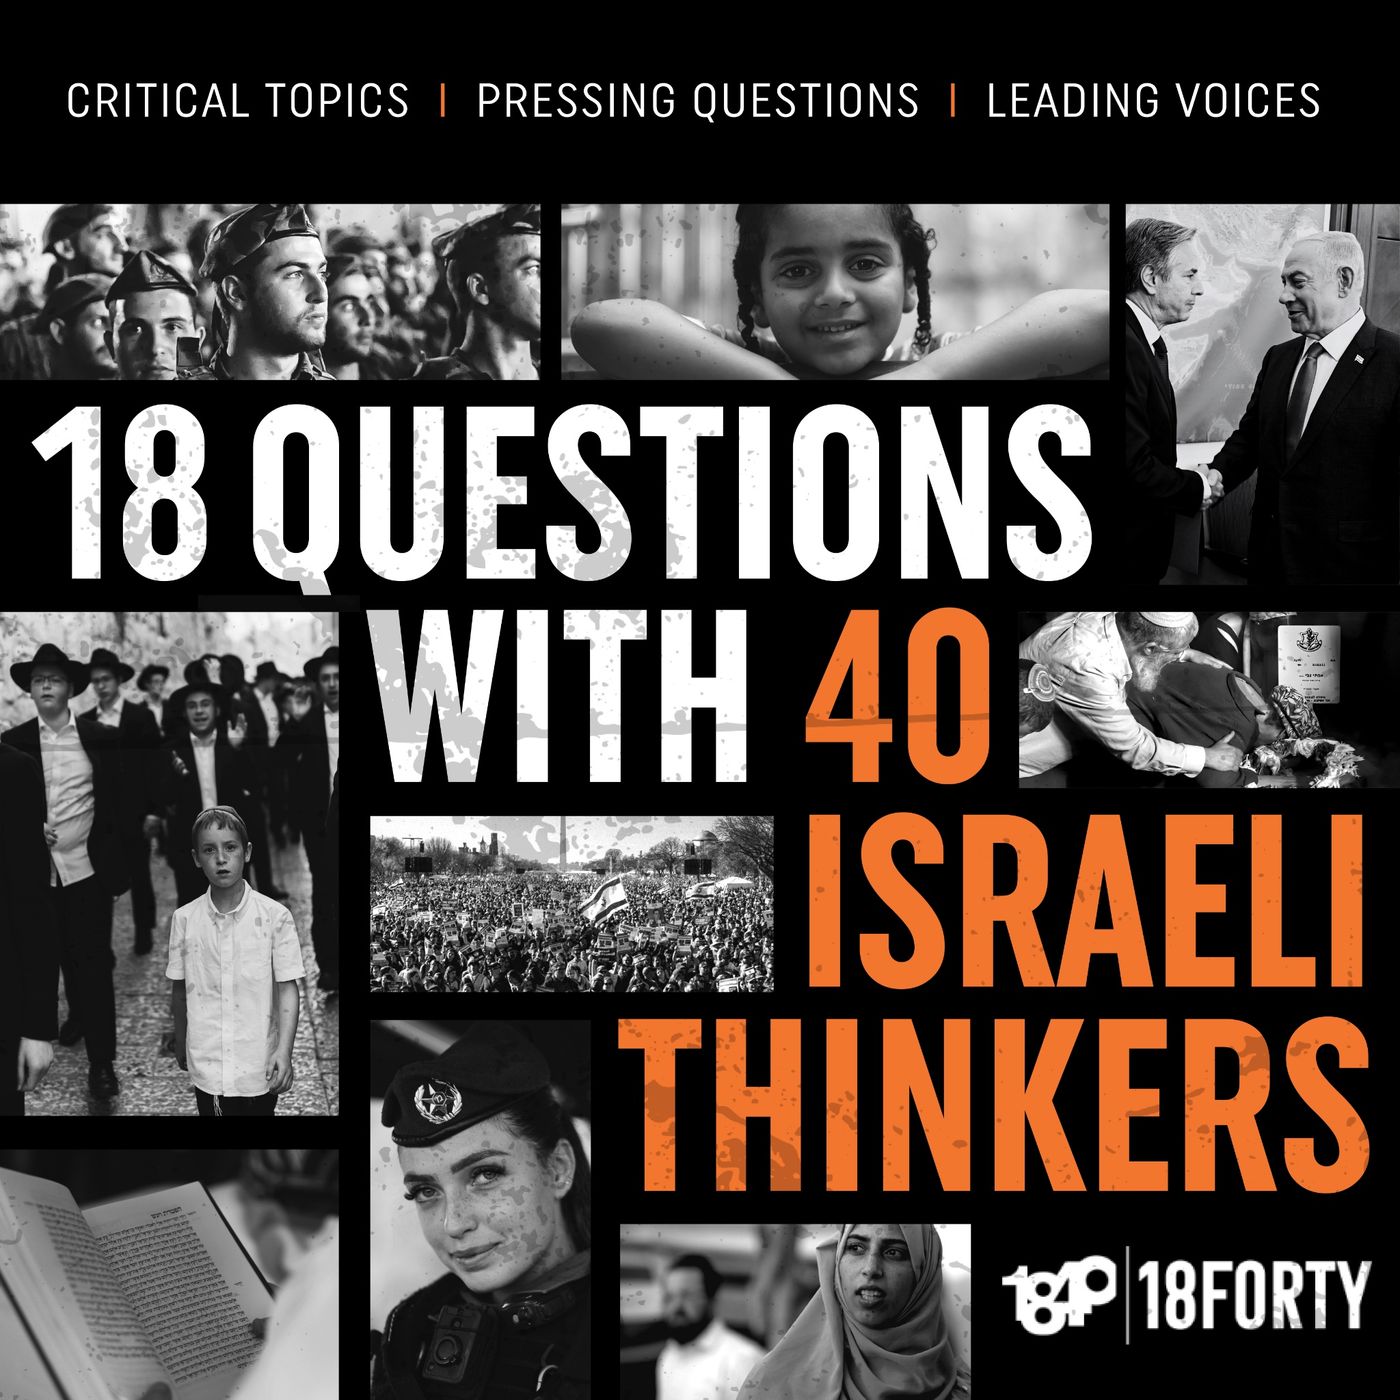 18 Questions, 40 Israeli Thinkers Image